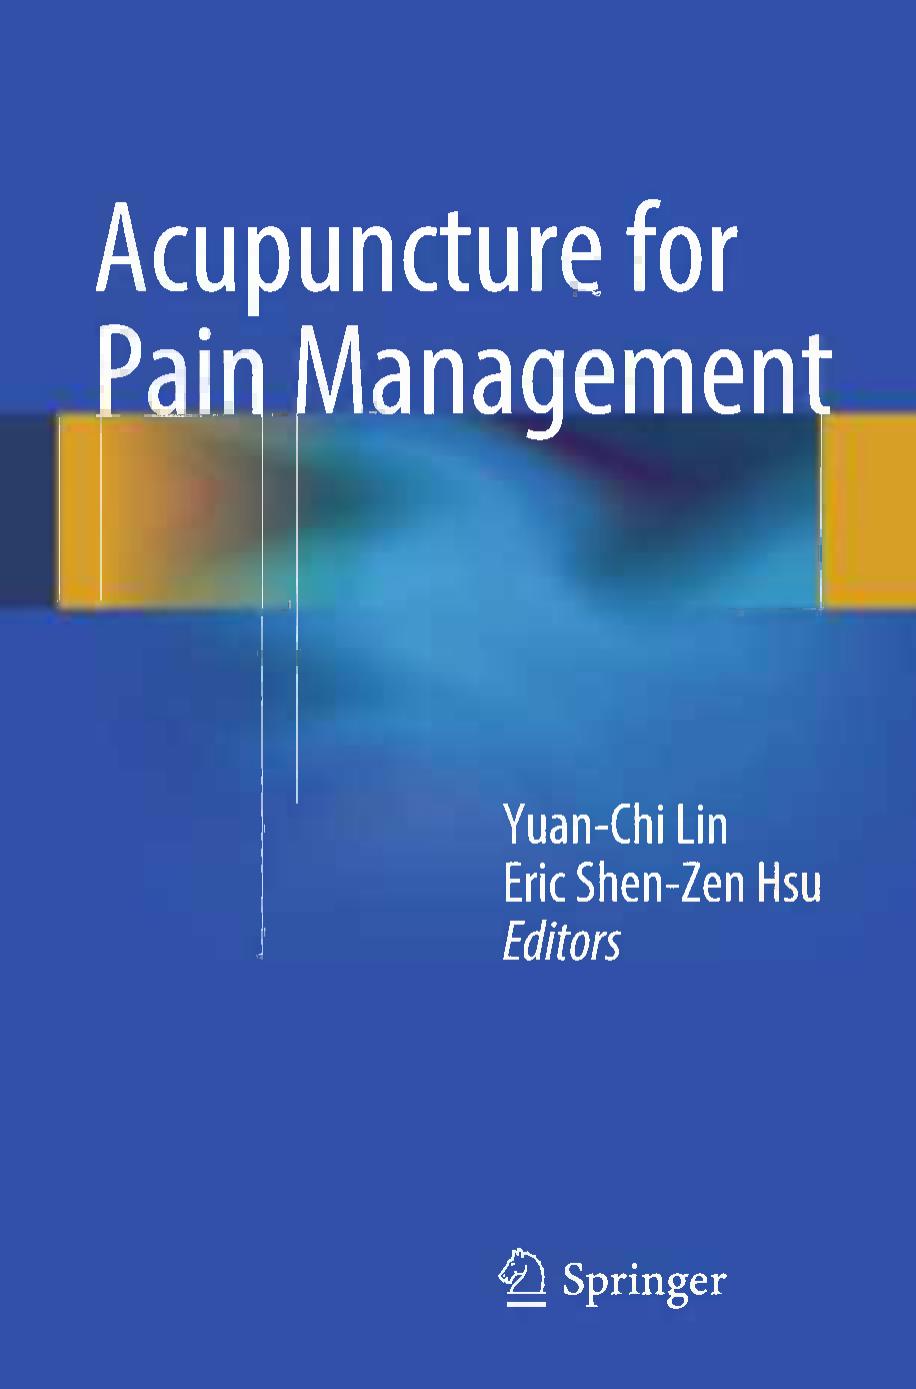 Acupuncture for Pain Management 2014